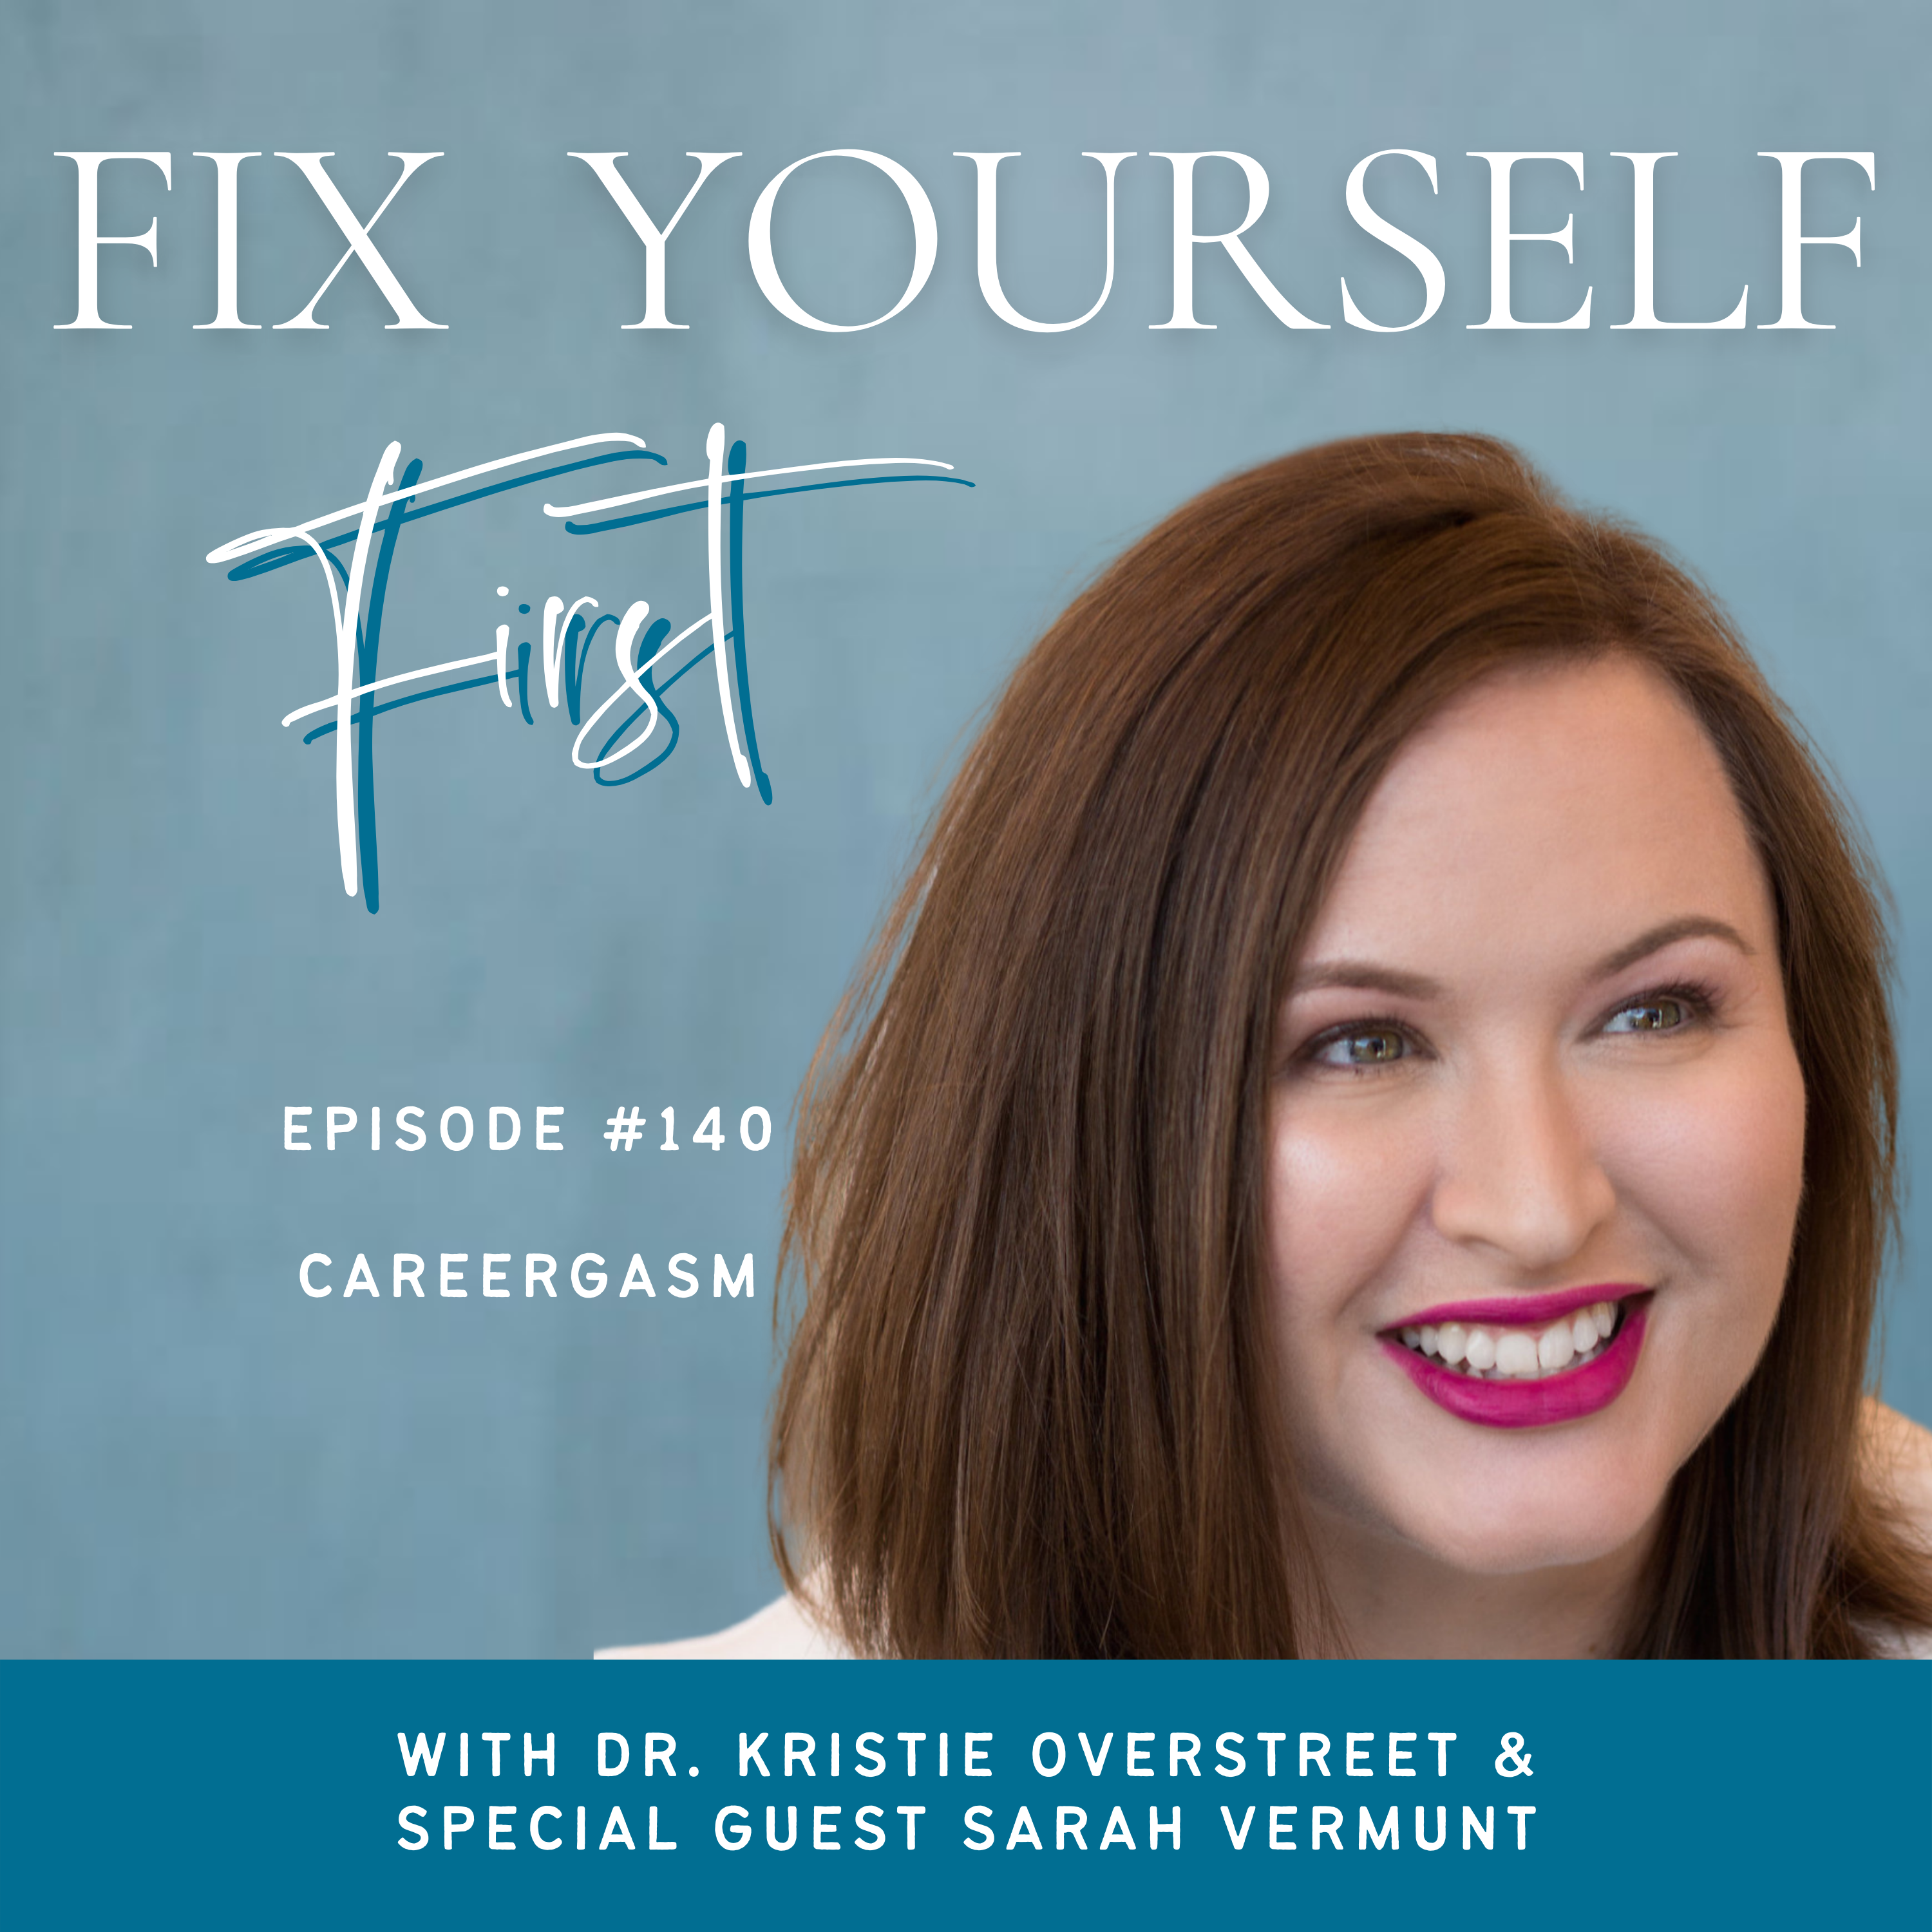 Fix Yourself First Episode 140 Careergasm with Sarah Vermunt